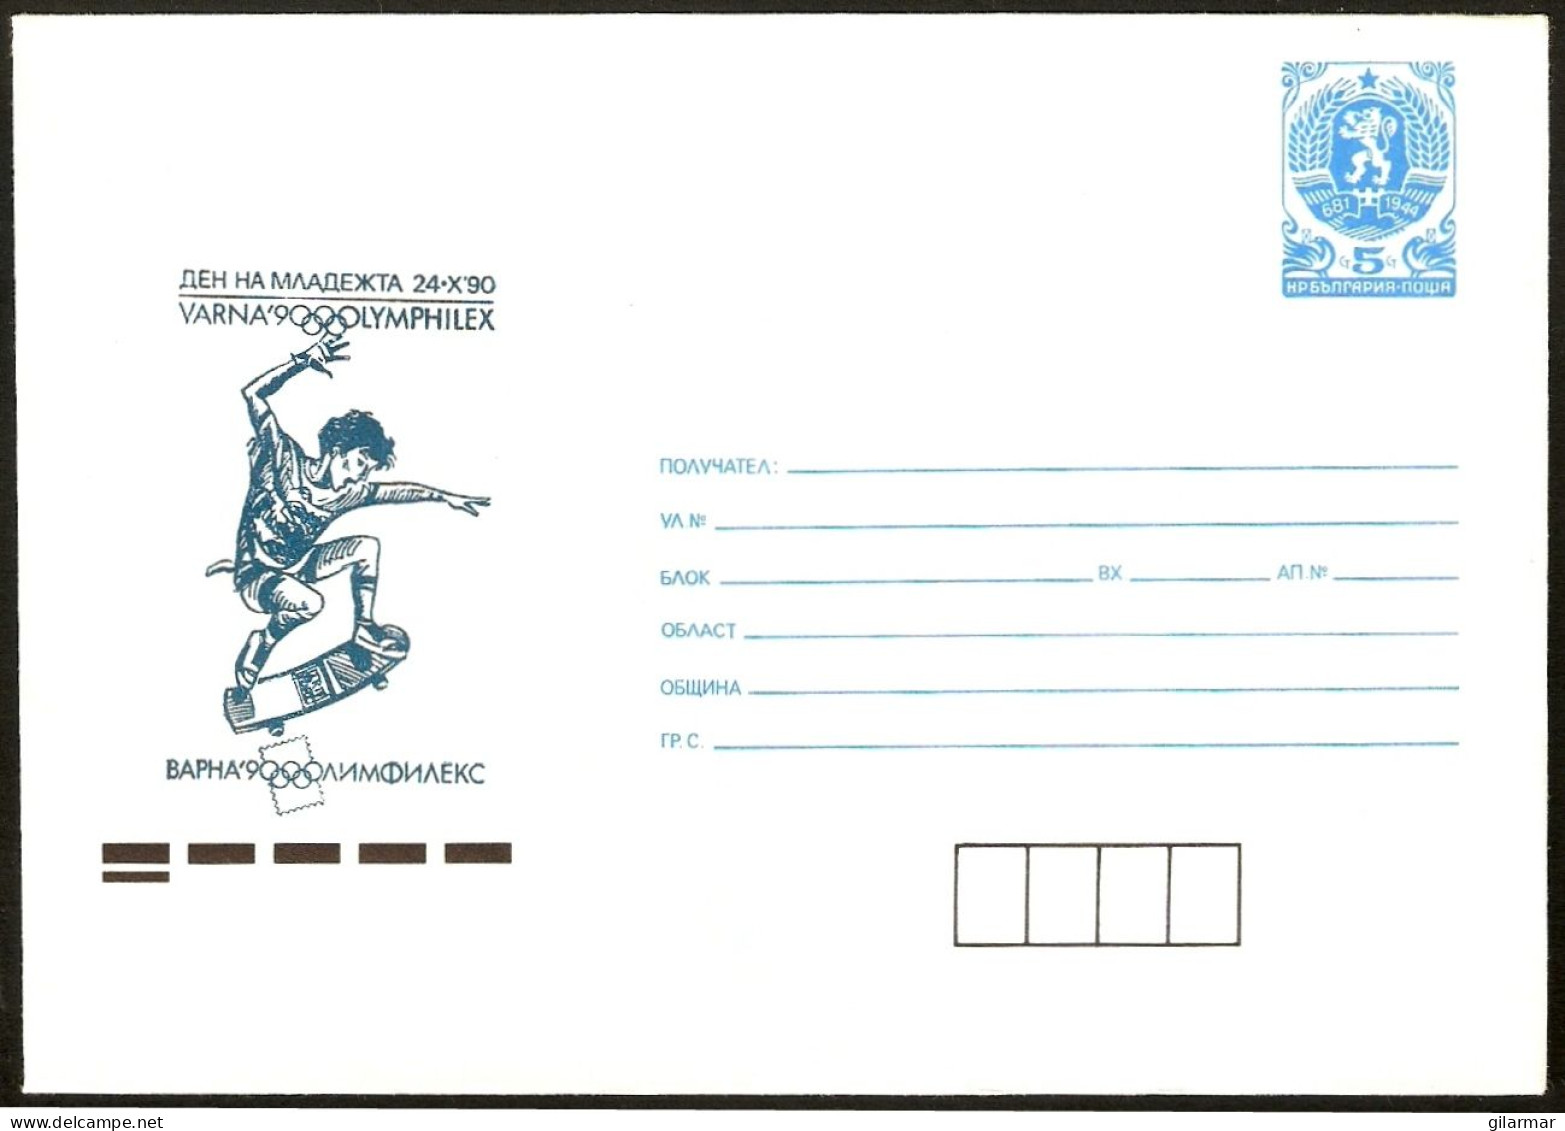 OLYMPIC GAMES / SKATEBOARDING - BULGARIA 1990 - OLYMPHILEX '90 A VARNA - BUSTA POSTALE - M - Skateboard